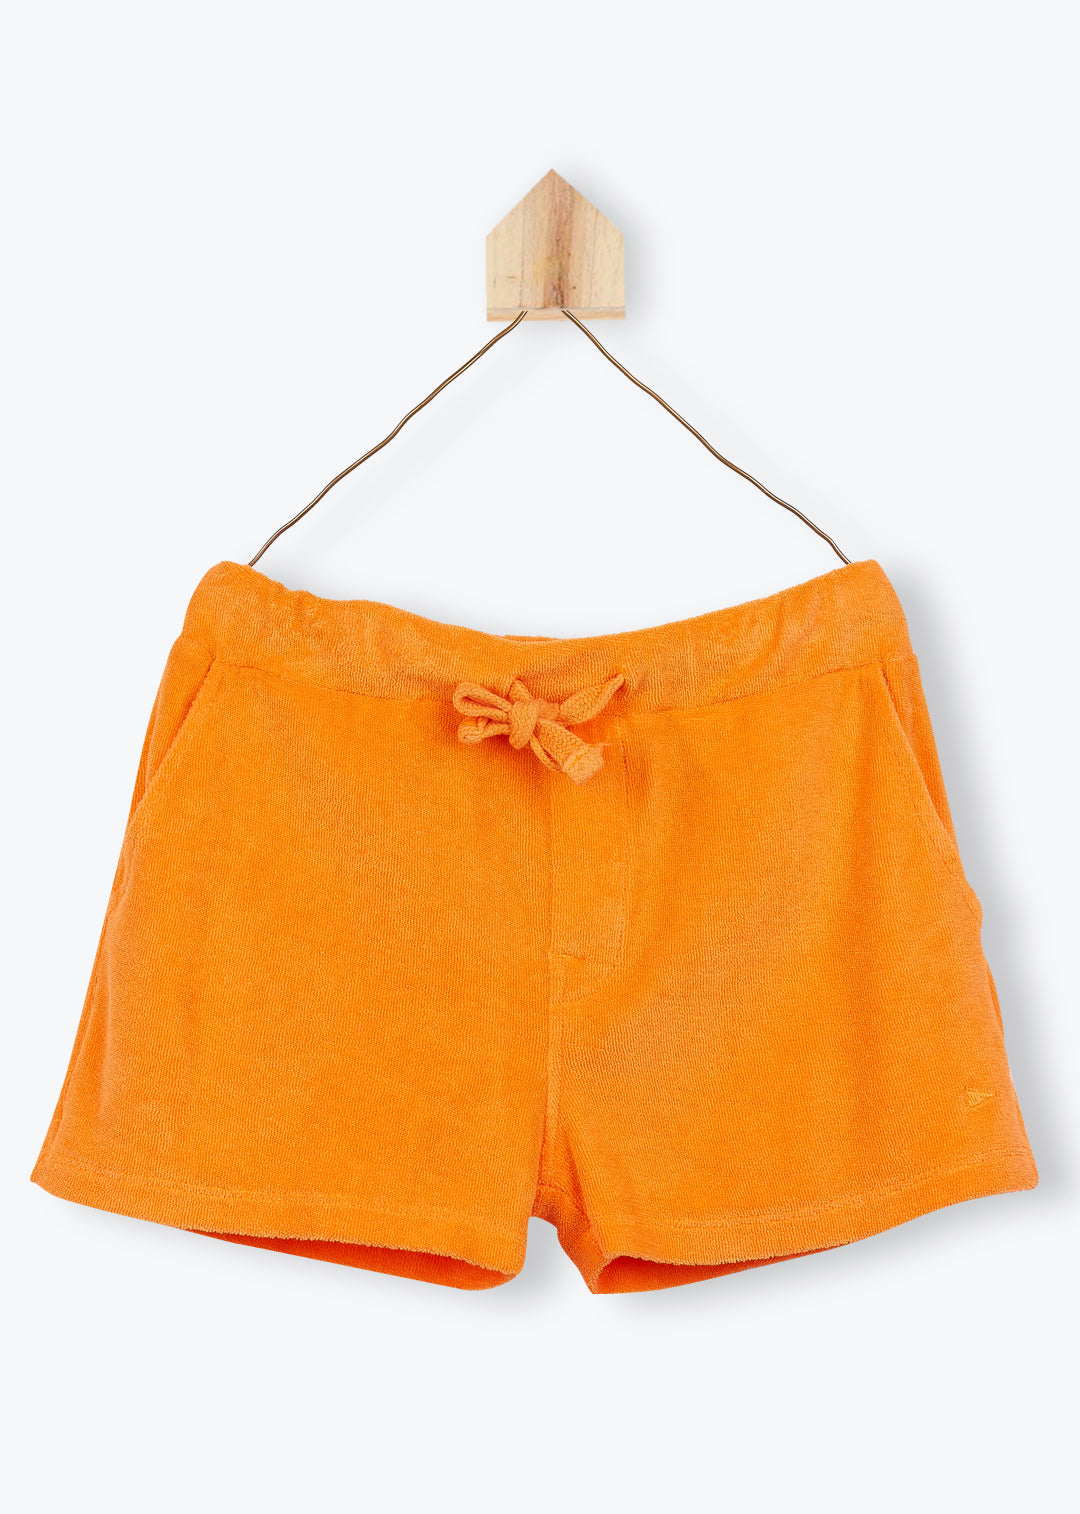 Shorts Boy Towelling Mandarine - قميص